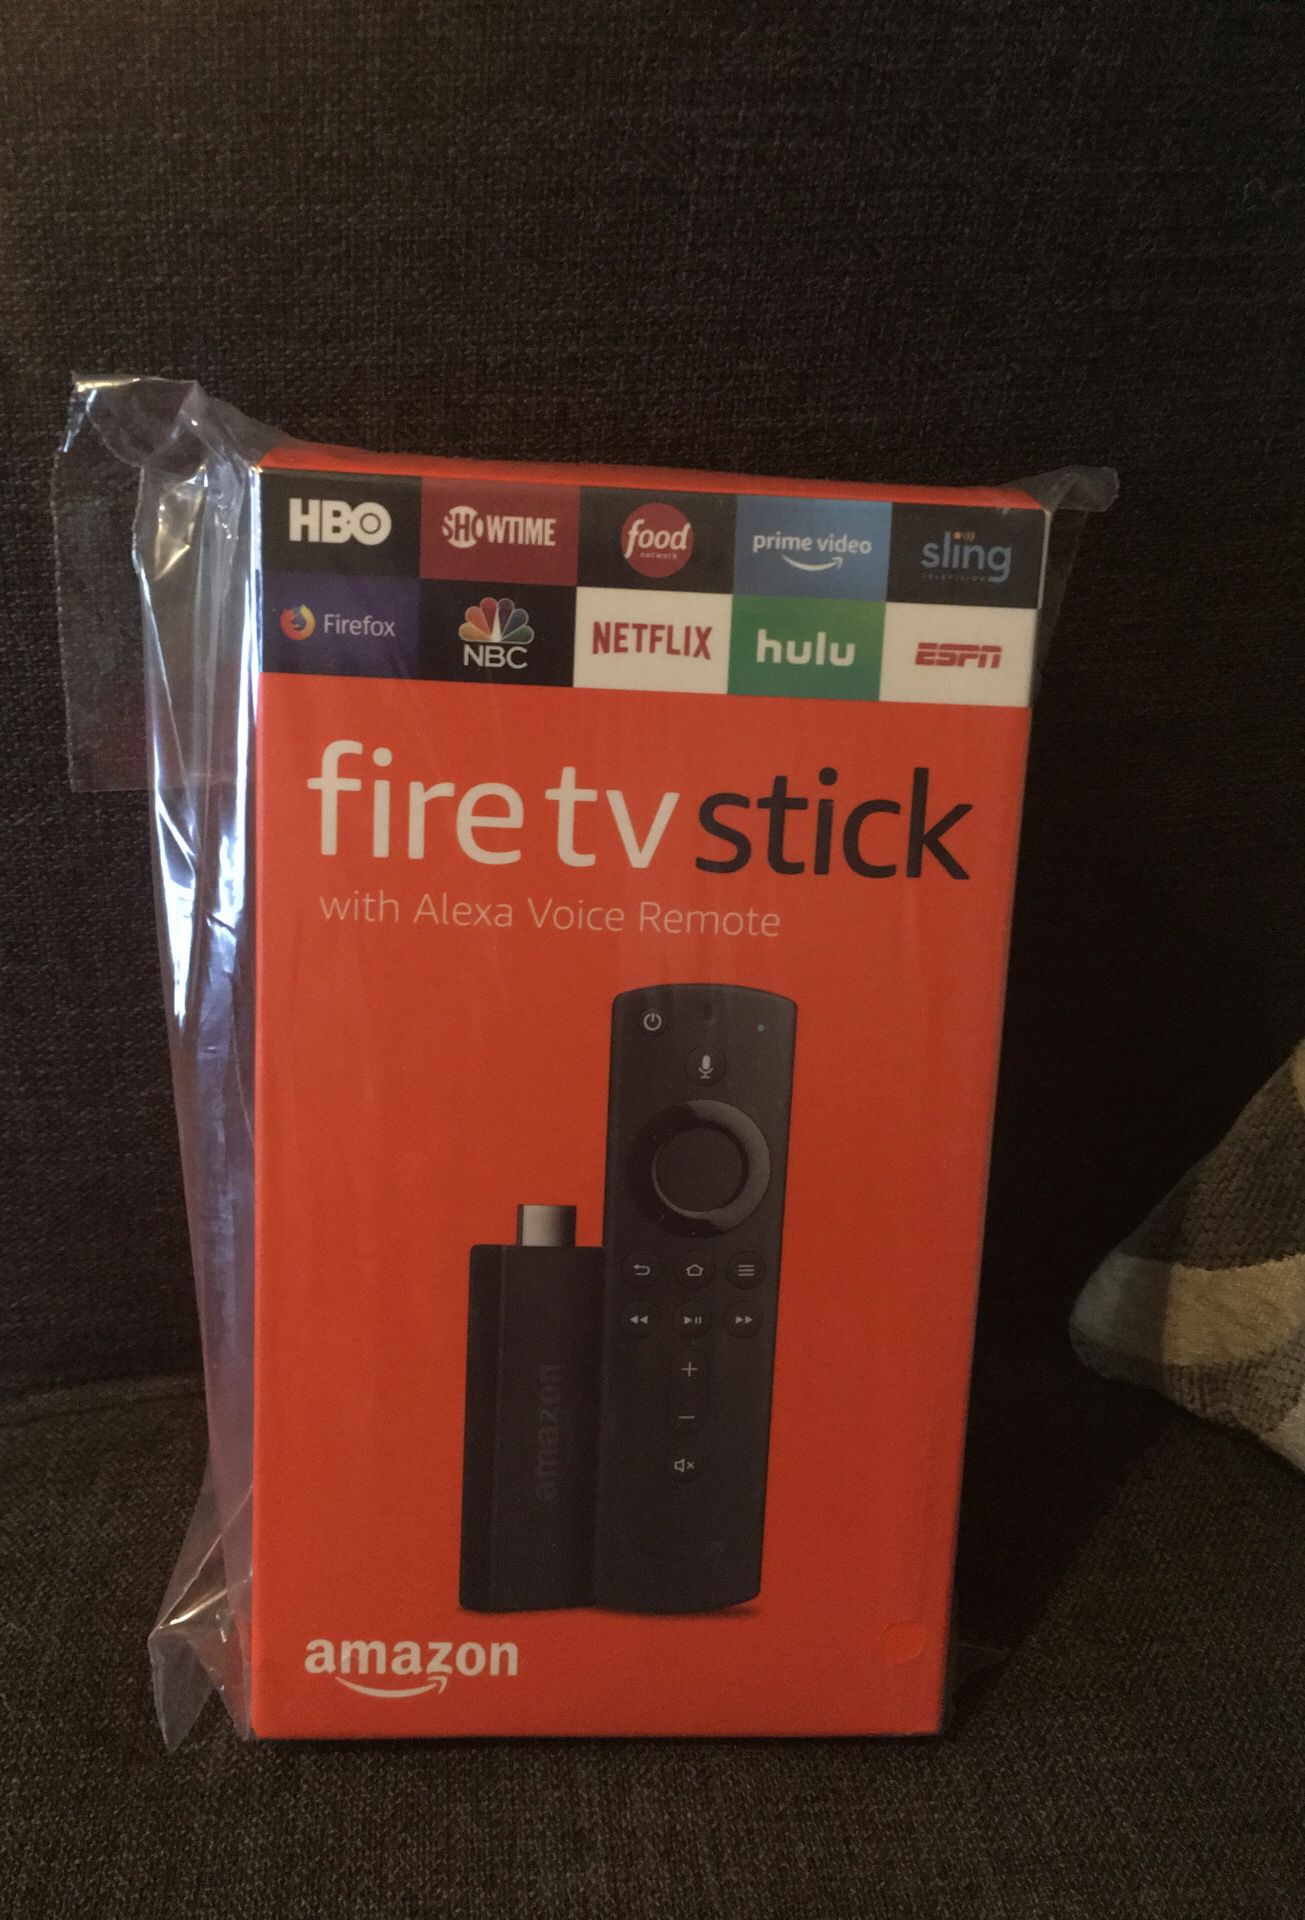 Fire tv stick with Alexa voice remote